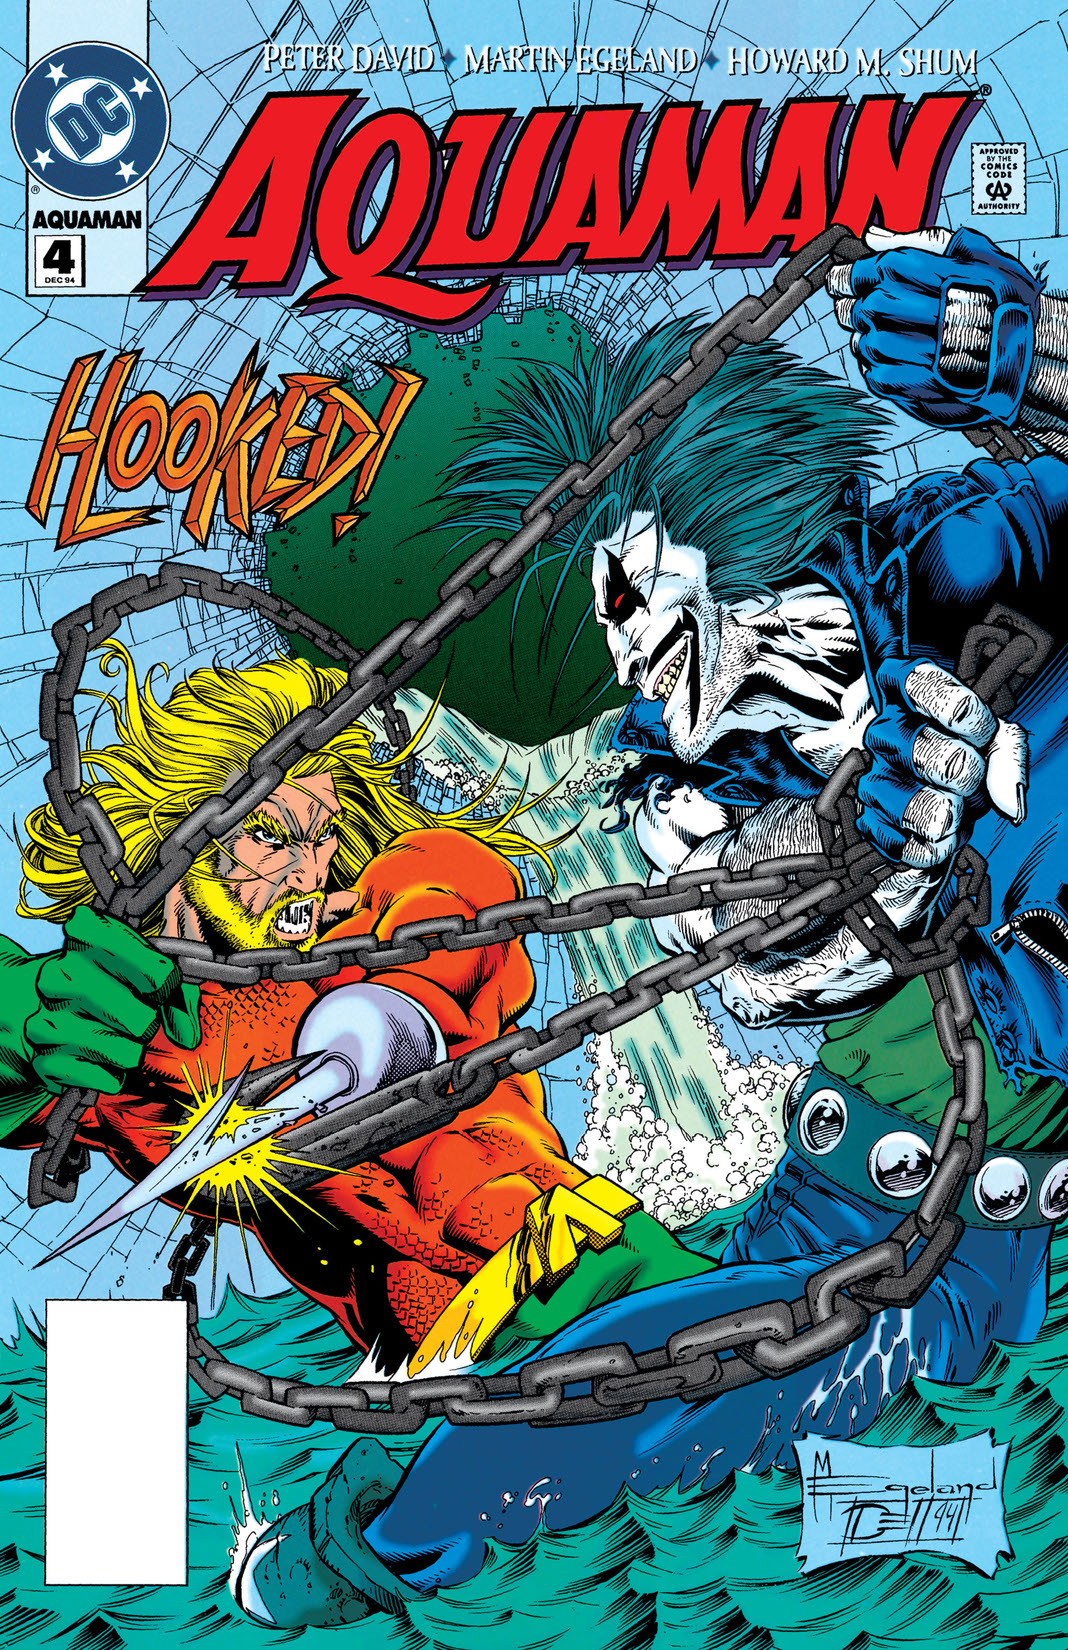 Aquaman (1994-) #4 preview images